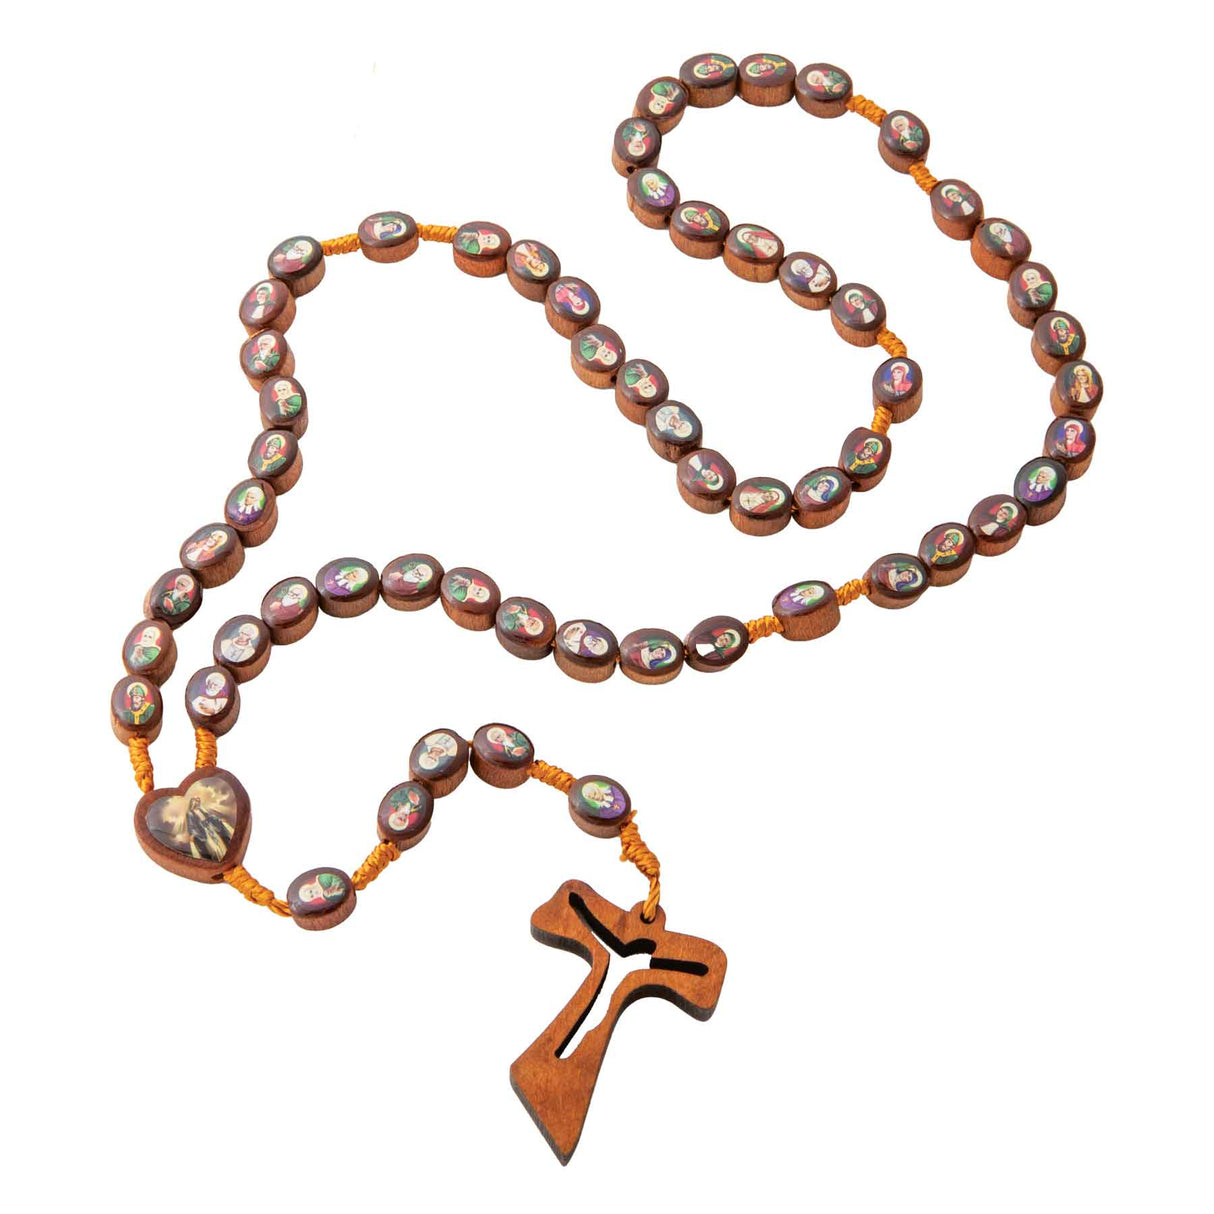 Saints of Ireland Rosary - Creative Irish Gifts